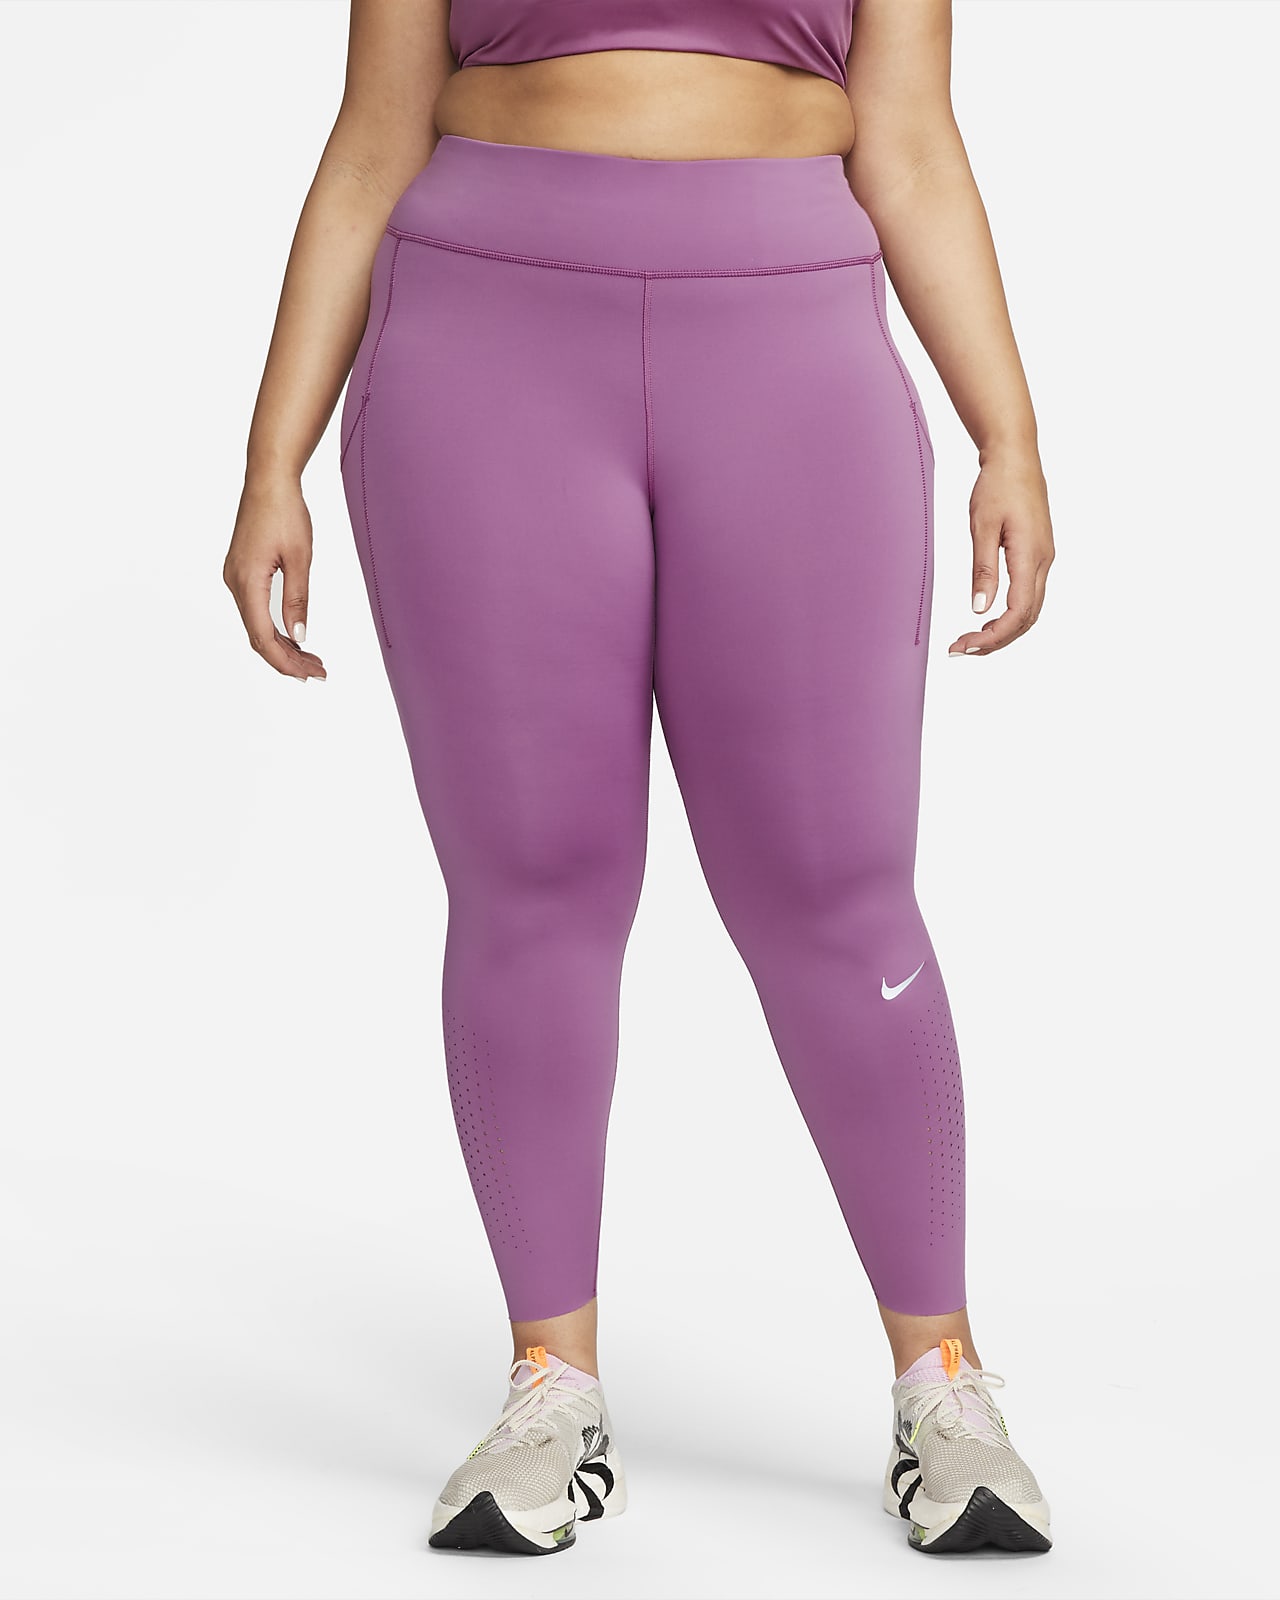 Nike Epic Luxe Women's Mid-Rise Running Leggings (Plus Size). .com